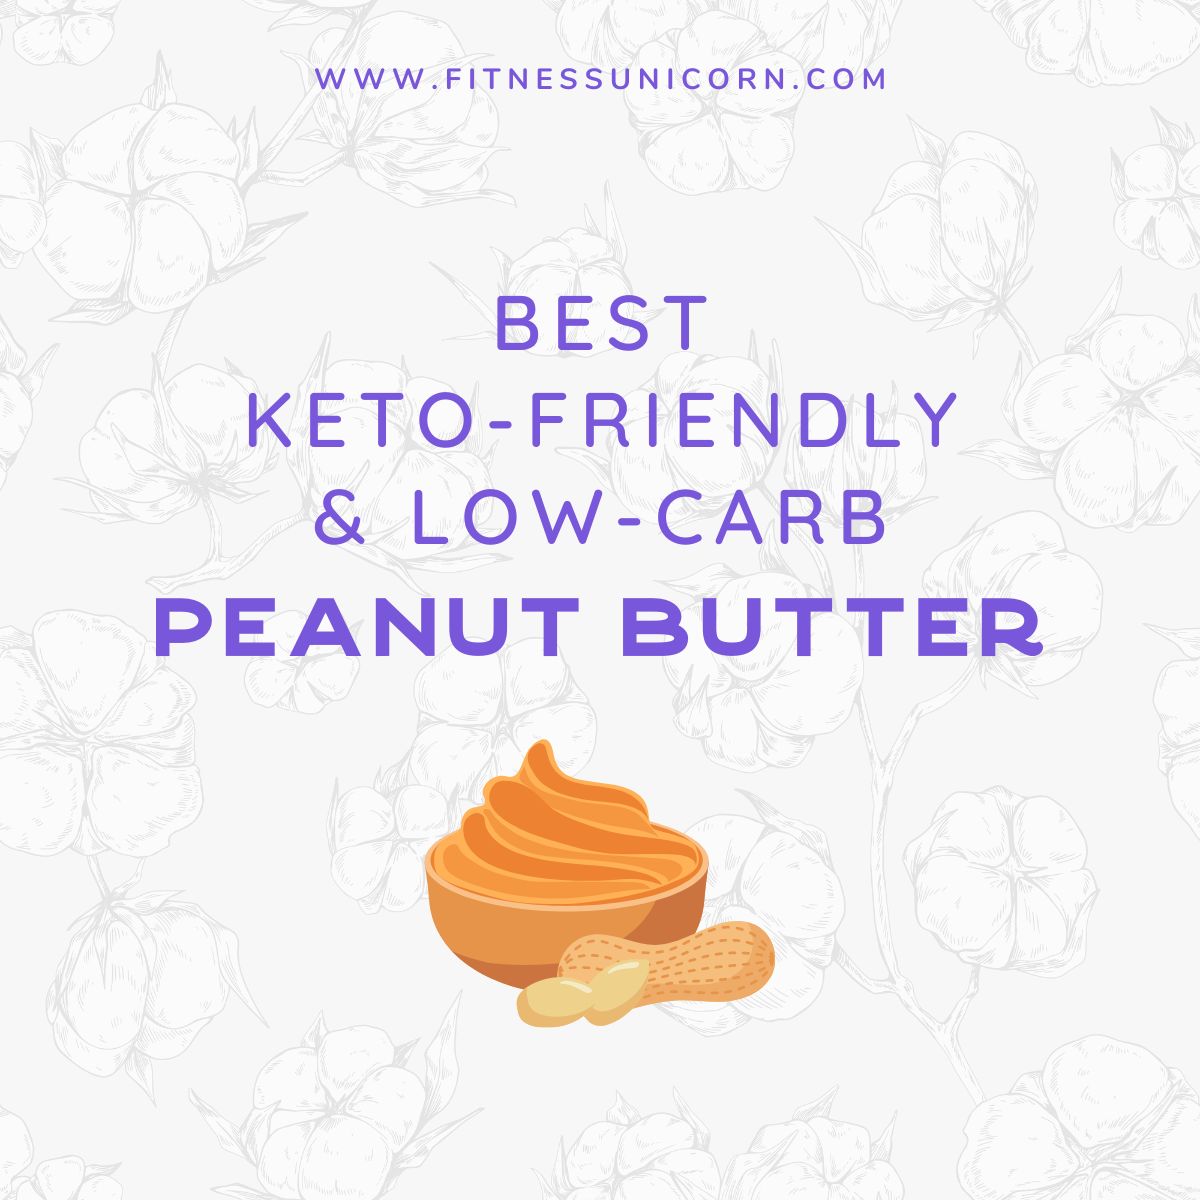 Best keto low carb peanut butter